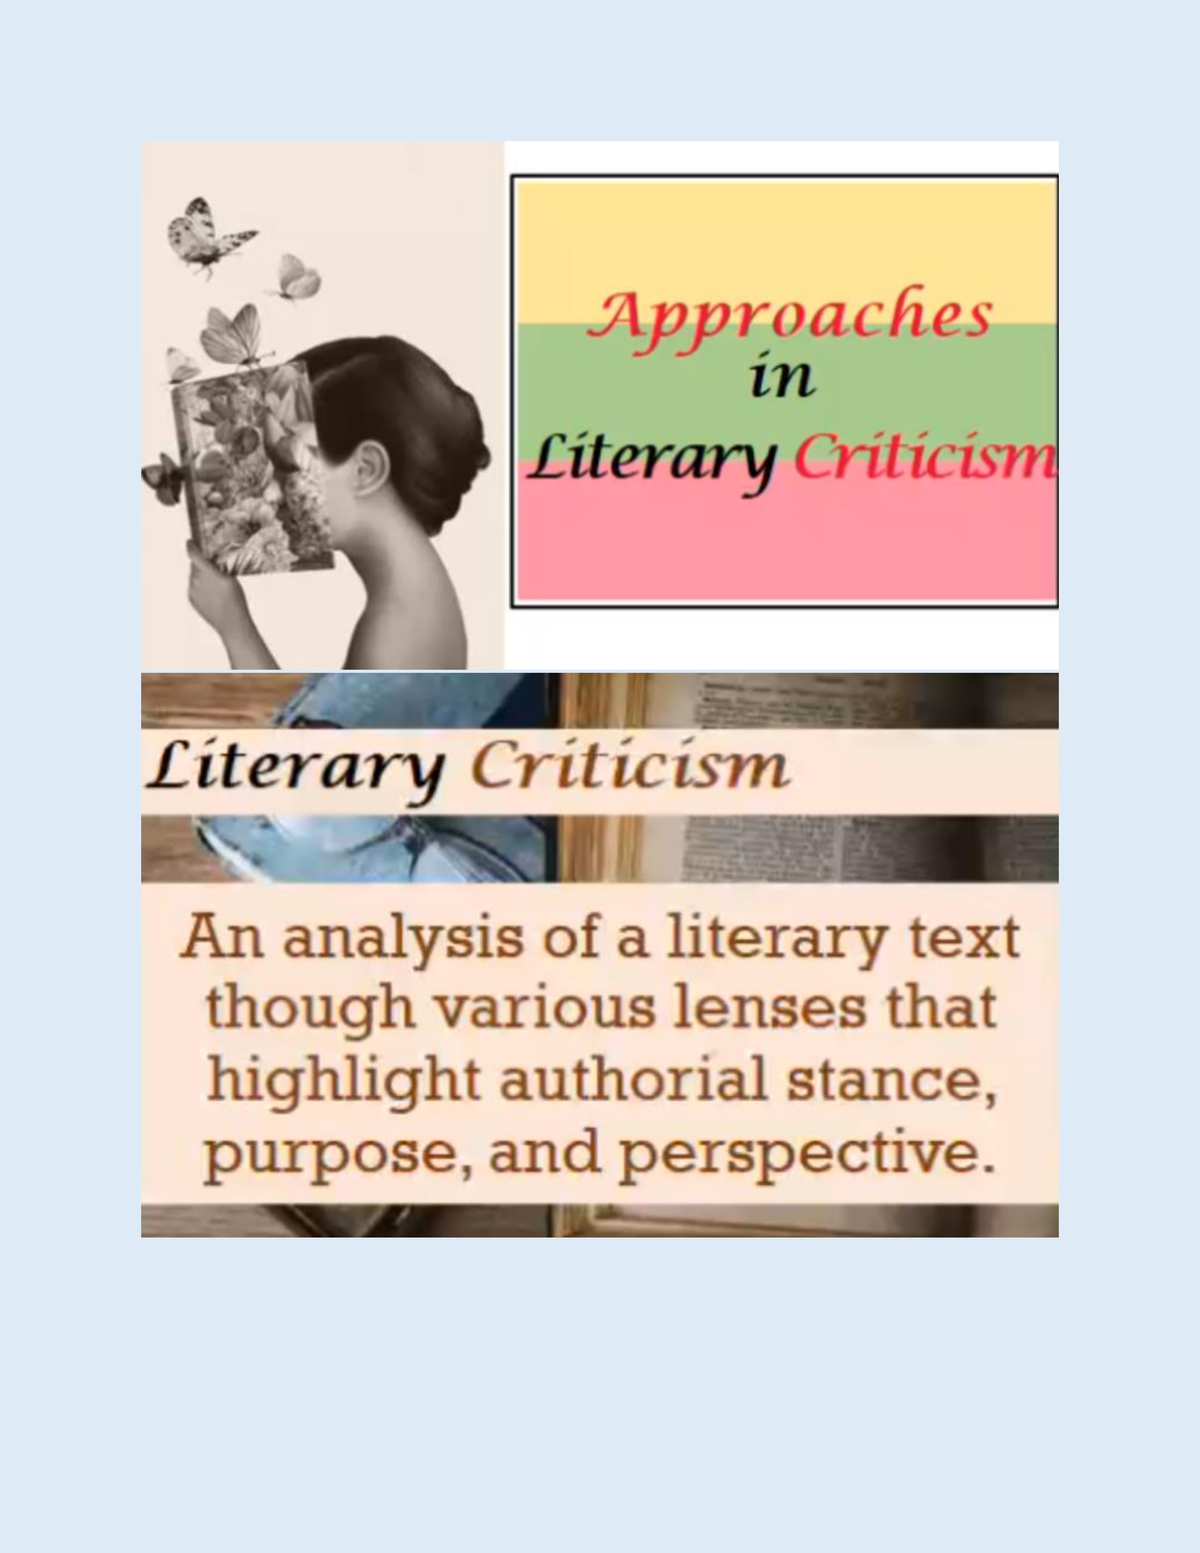 methodology of literary criticism